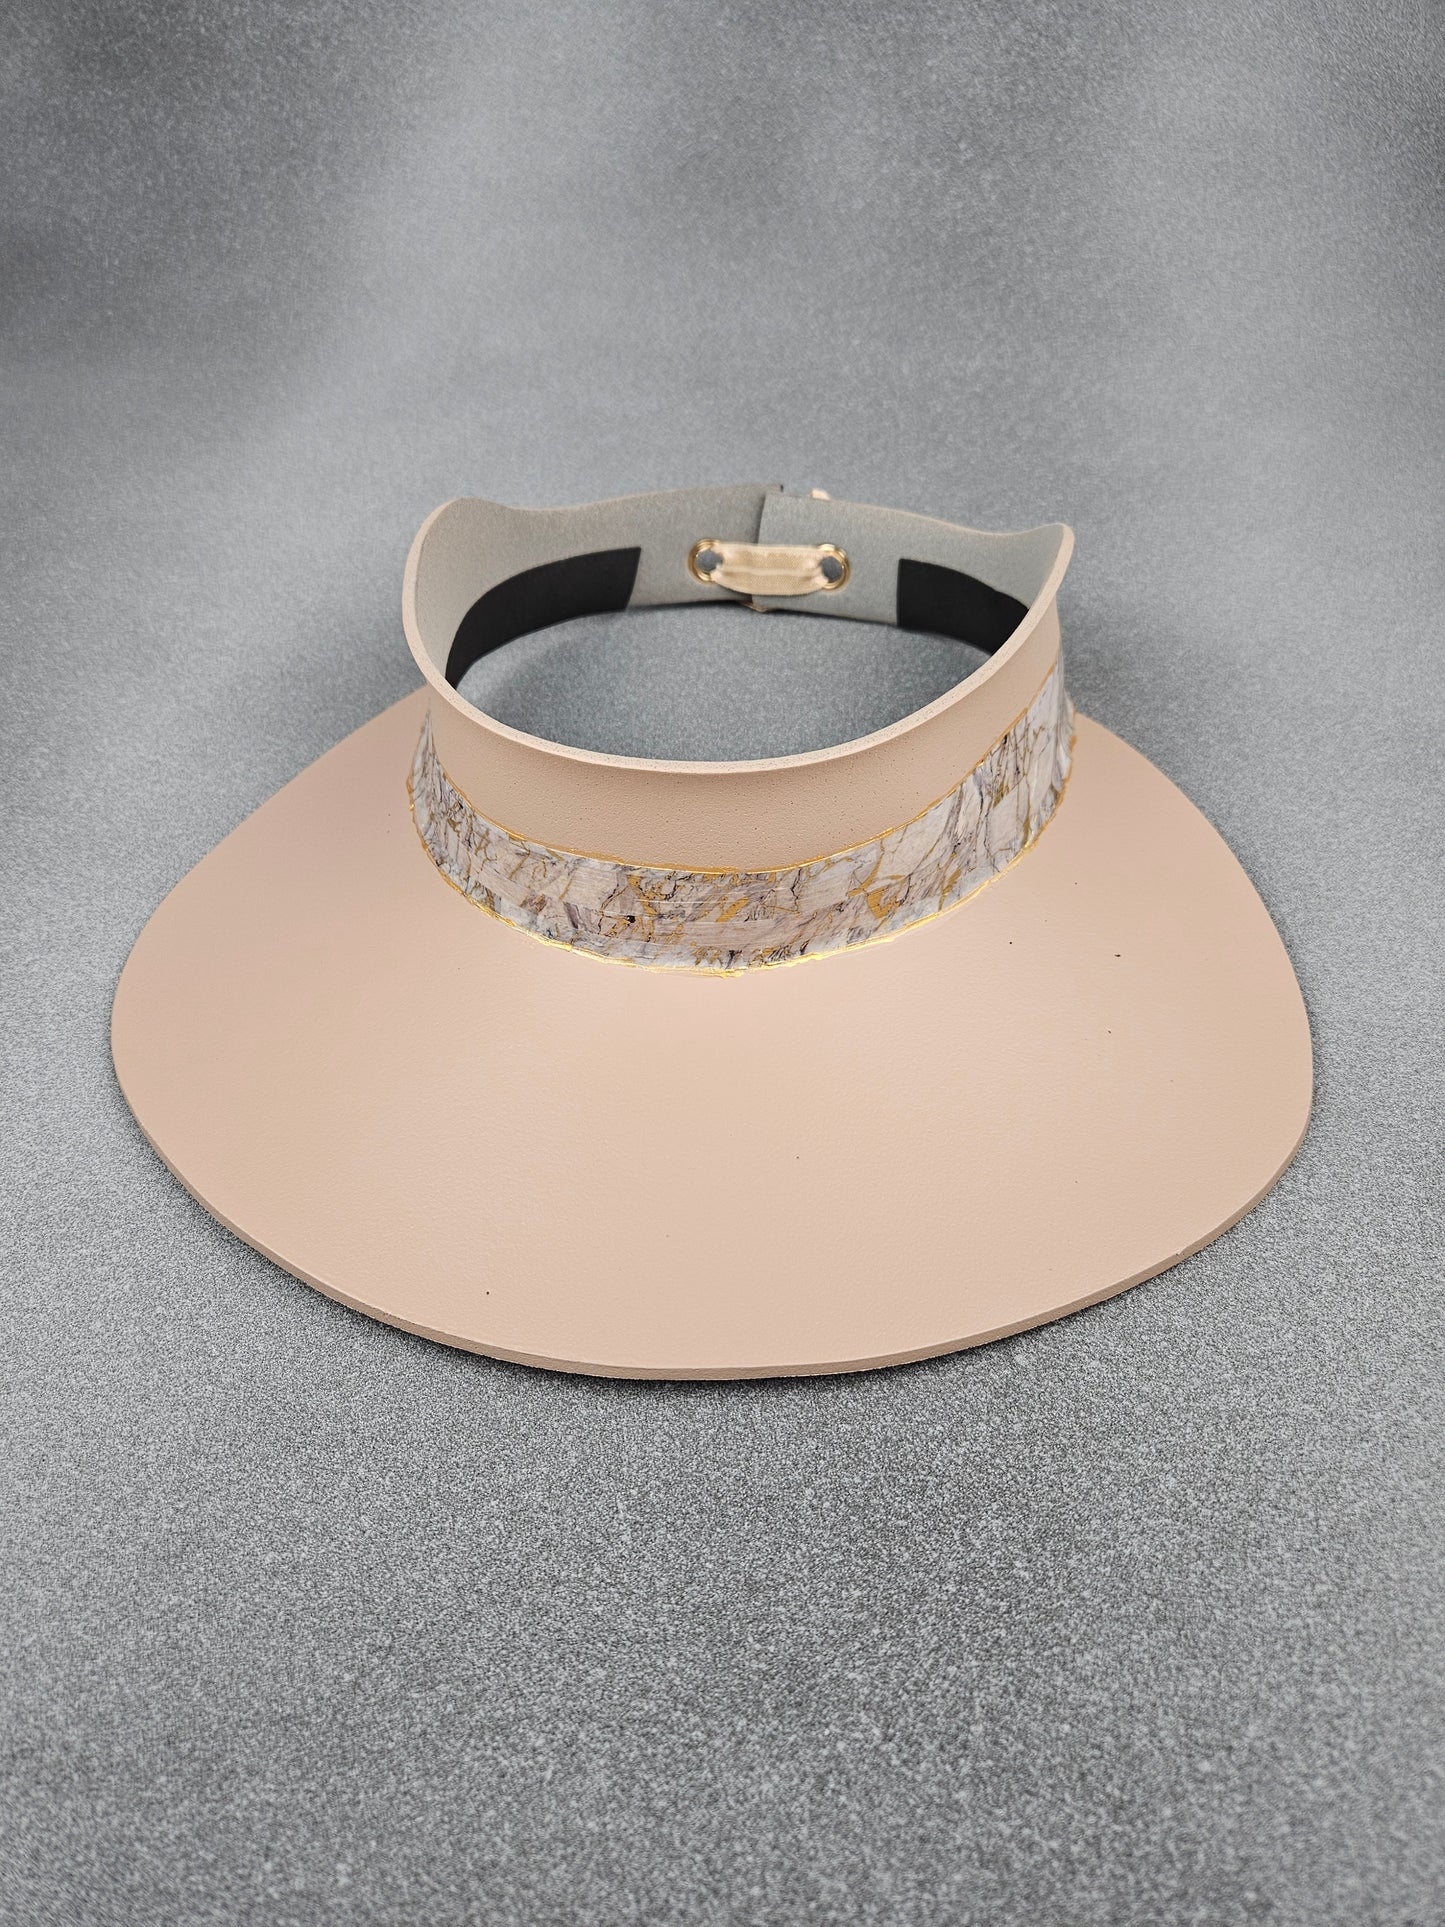 Peachy Beige Audrey Sun Visor Hat with Elegant Marbled Golden Band: UV Resistant, Walks, Brunch, Tea, Golf, Wedding, Church, No Headache, 1940s Pool, Beach, Big Brim, Summer